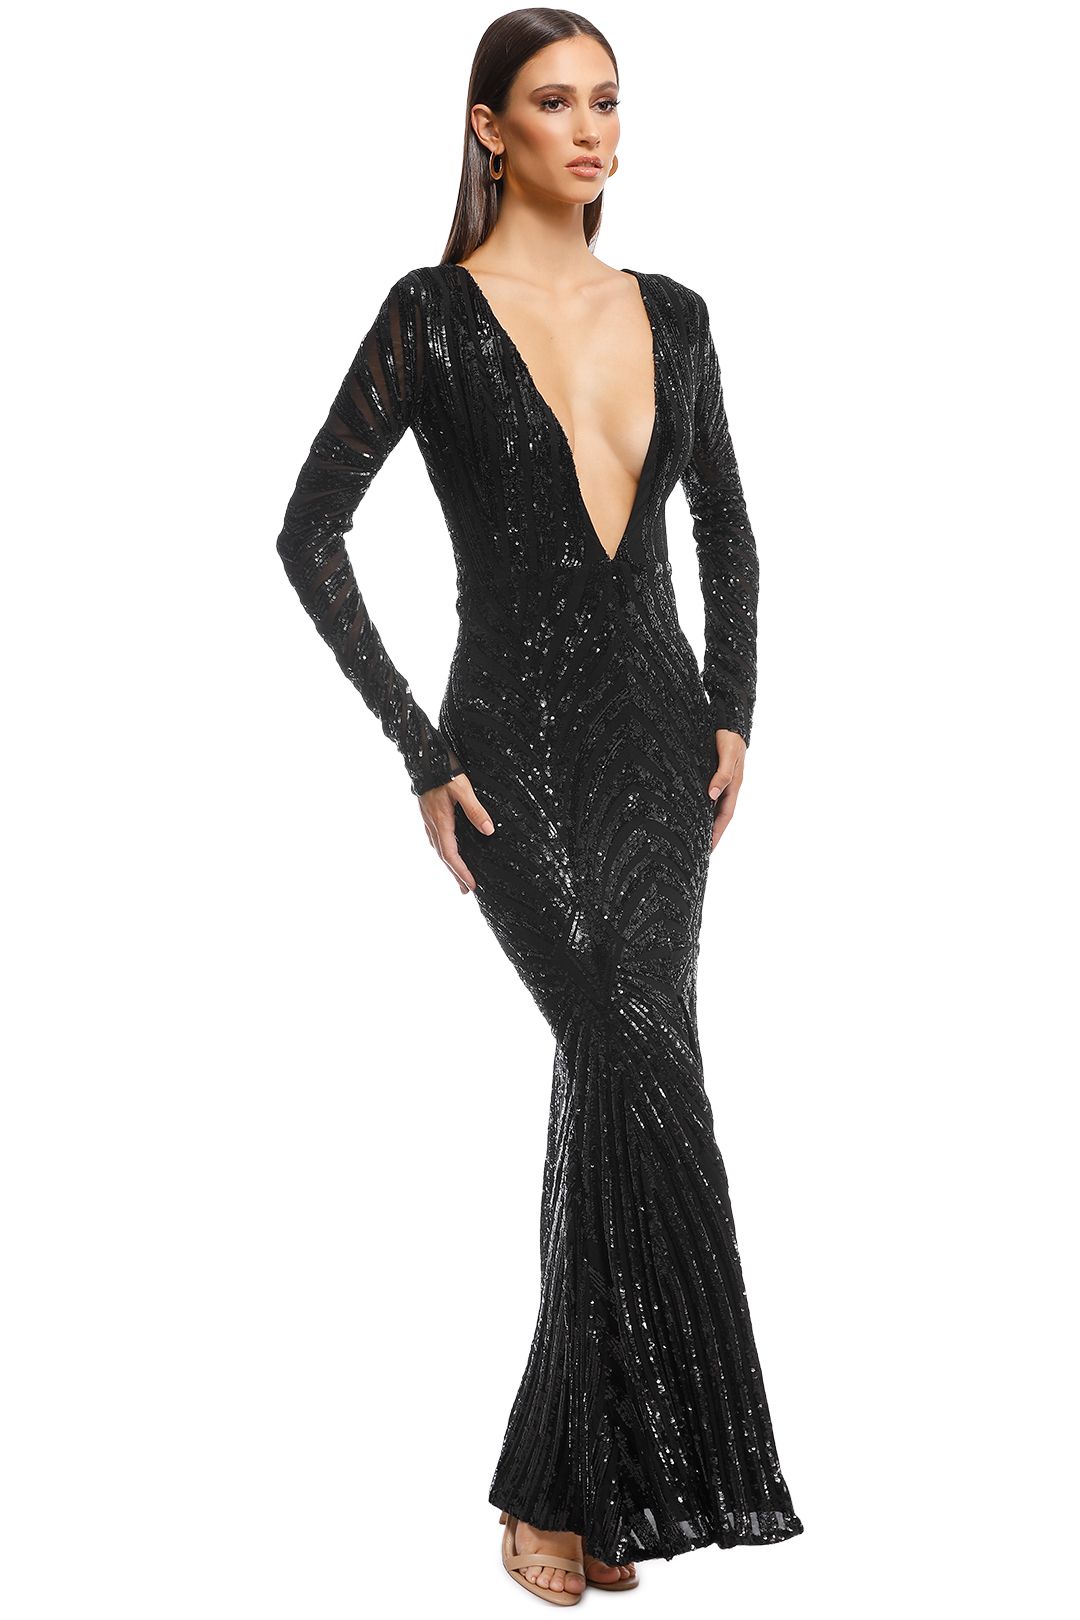 Ae'lkemi - Art Deco Sequin Gown - Black - Side